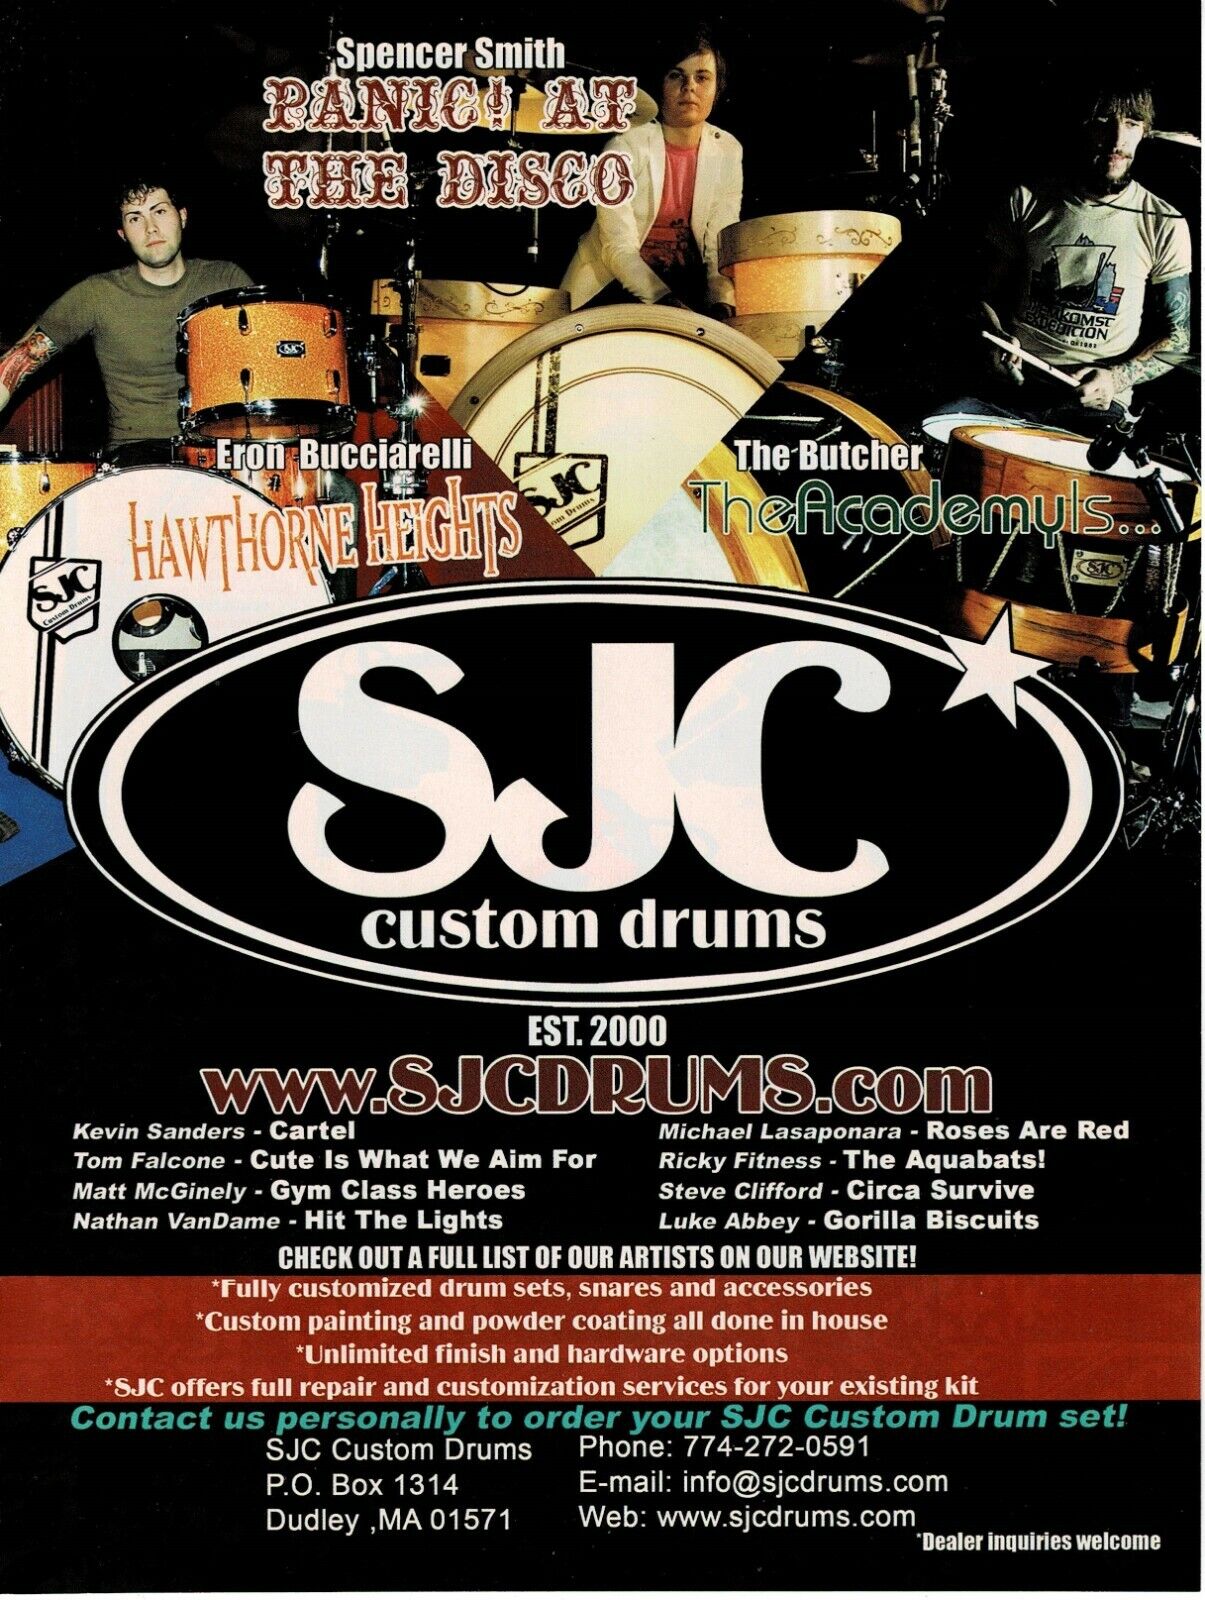 Spencer Smith / Eron Bucciarelli / The Butcher - SJC DRUMS - 2006 Print Ad